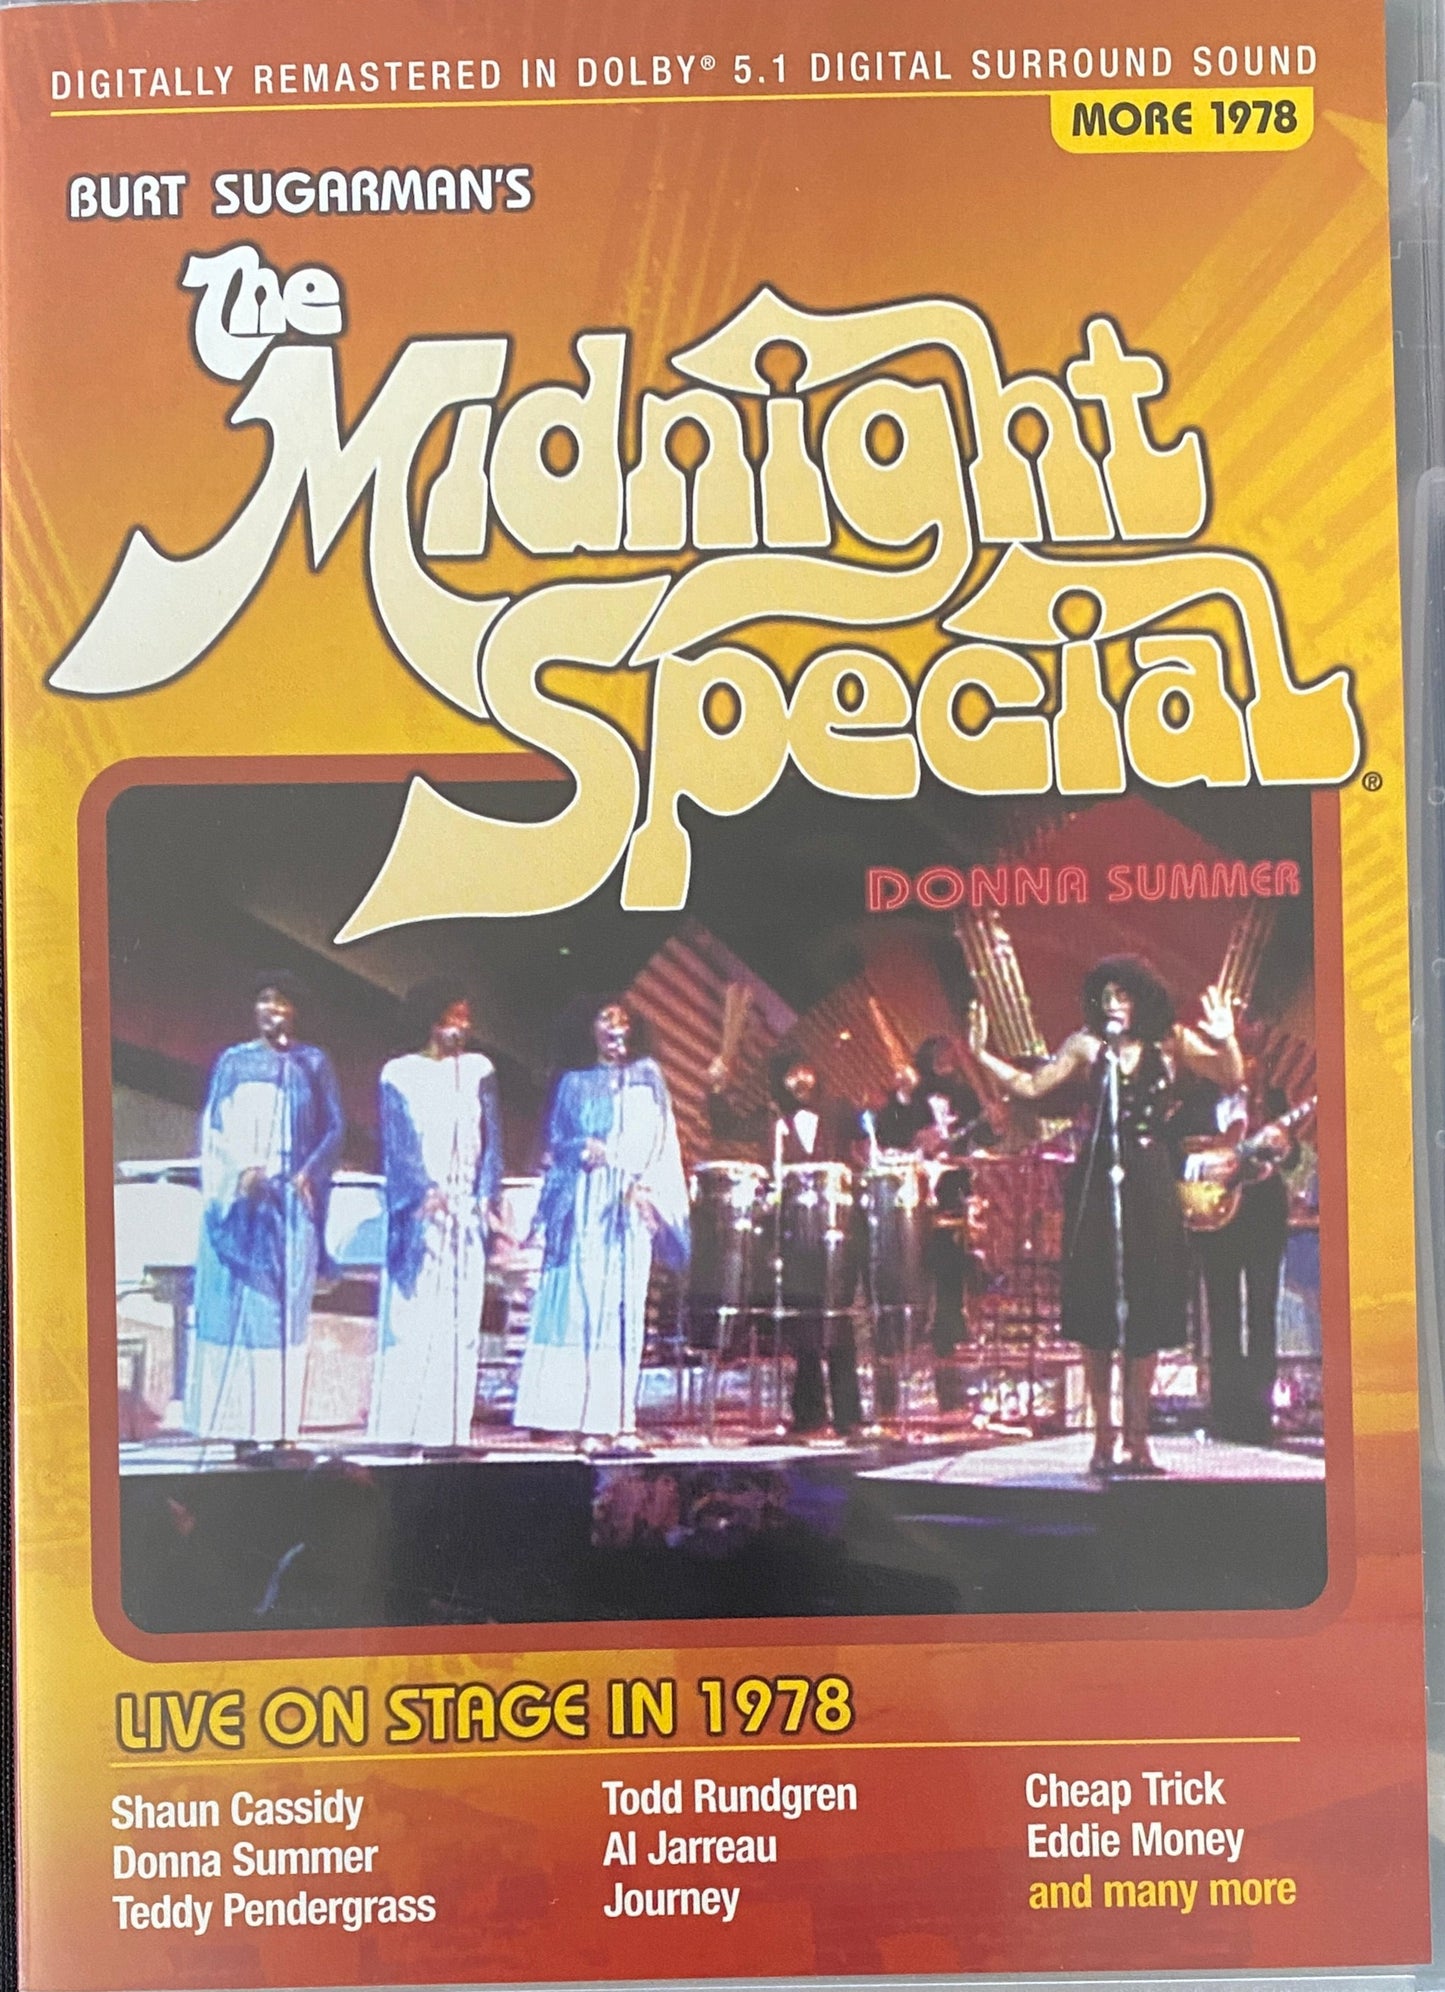 Burt Sugarman's The Midnight Special Live - More 1978